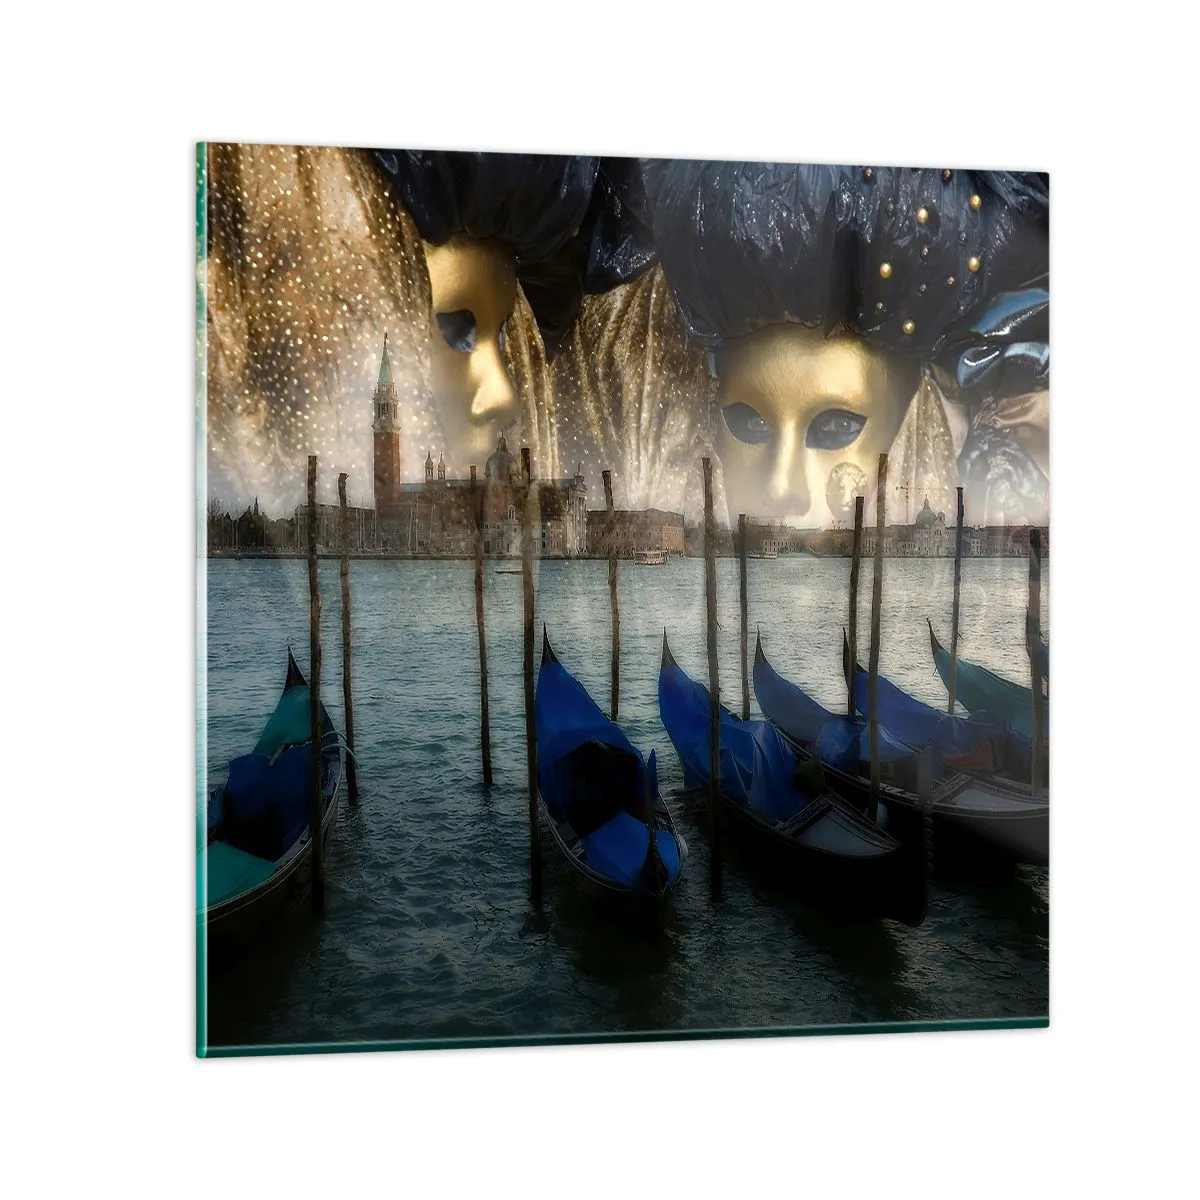 Obraz na skle Arttor 70x70 cm - Je čas začít karneval - Benátky, Masky, Město, Architektura, Gondola, Do obývacího pokoje, Do ložnice, Modrá, Zlatá, Vodorovné, Sklo, GAC70x70-0250